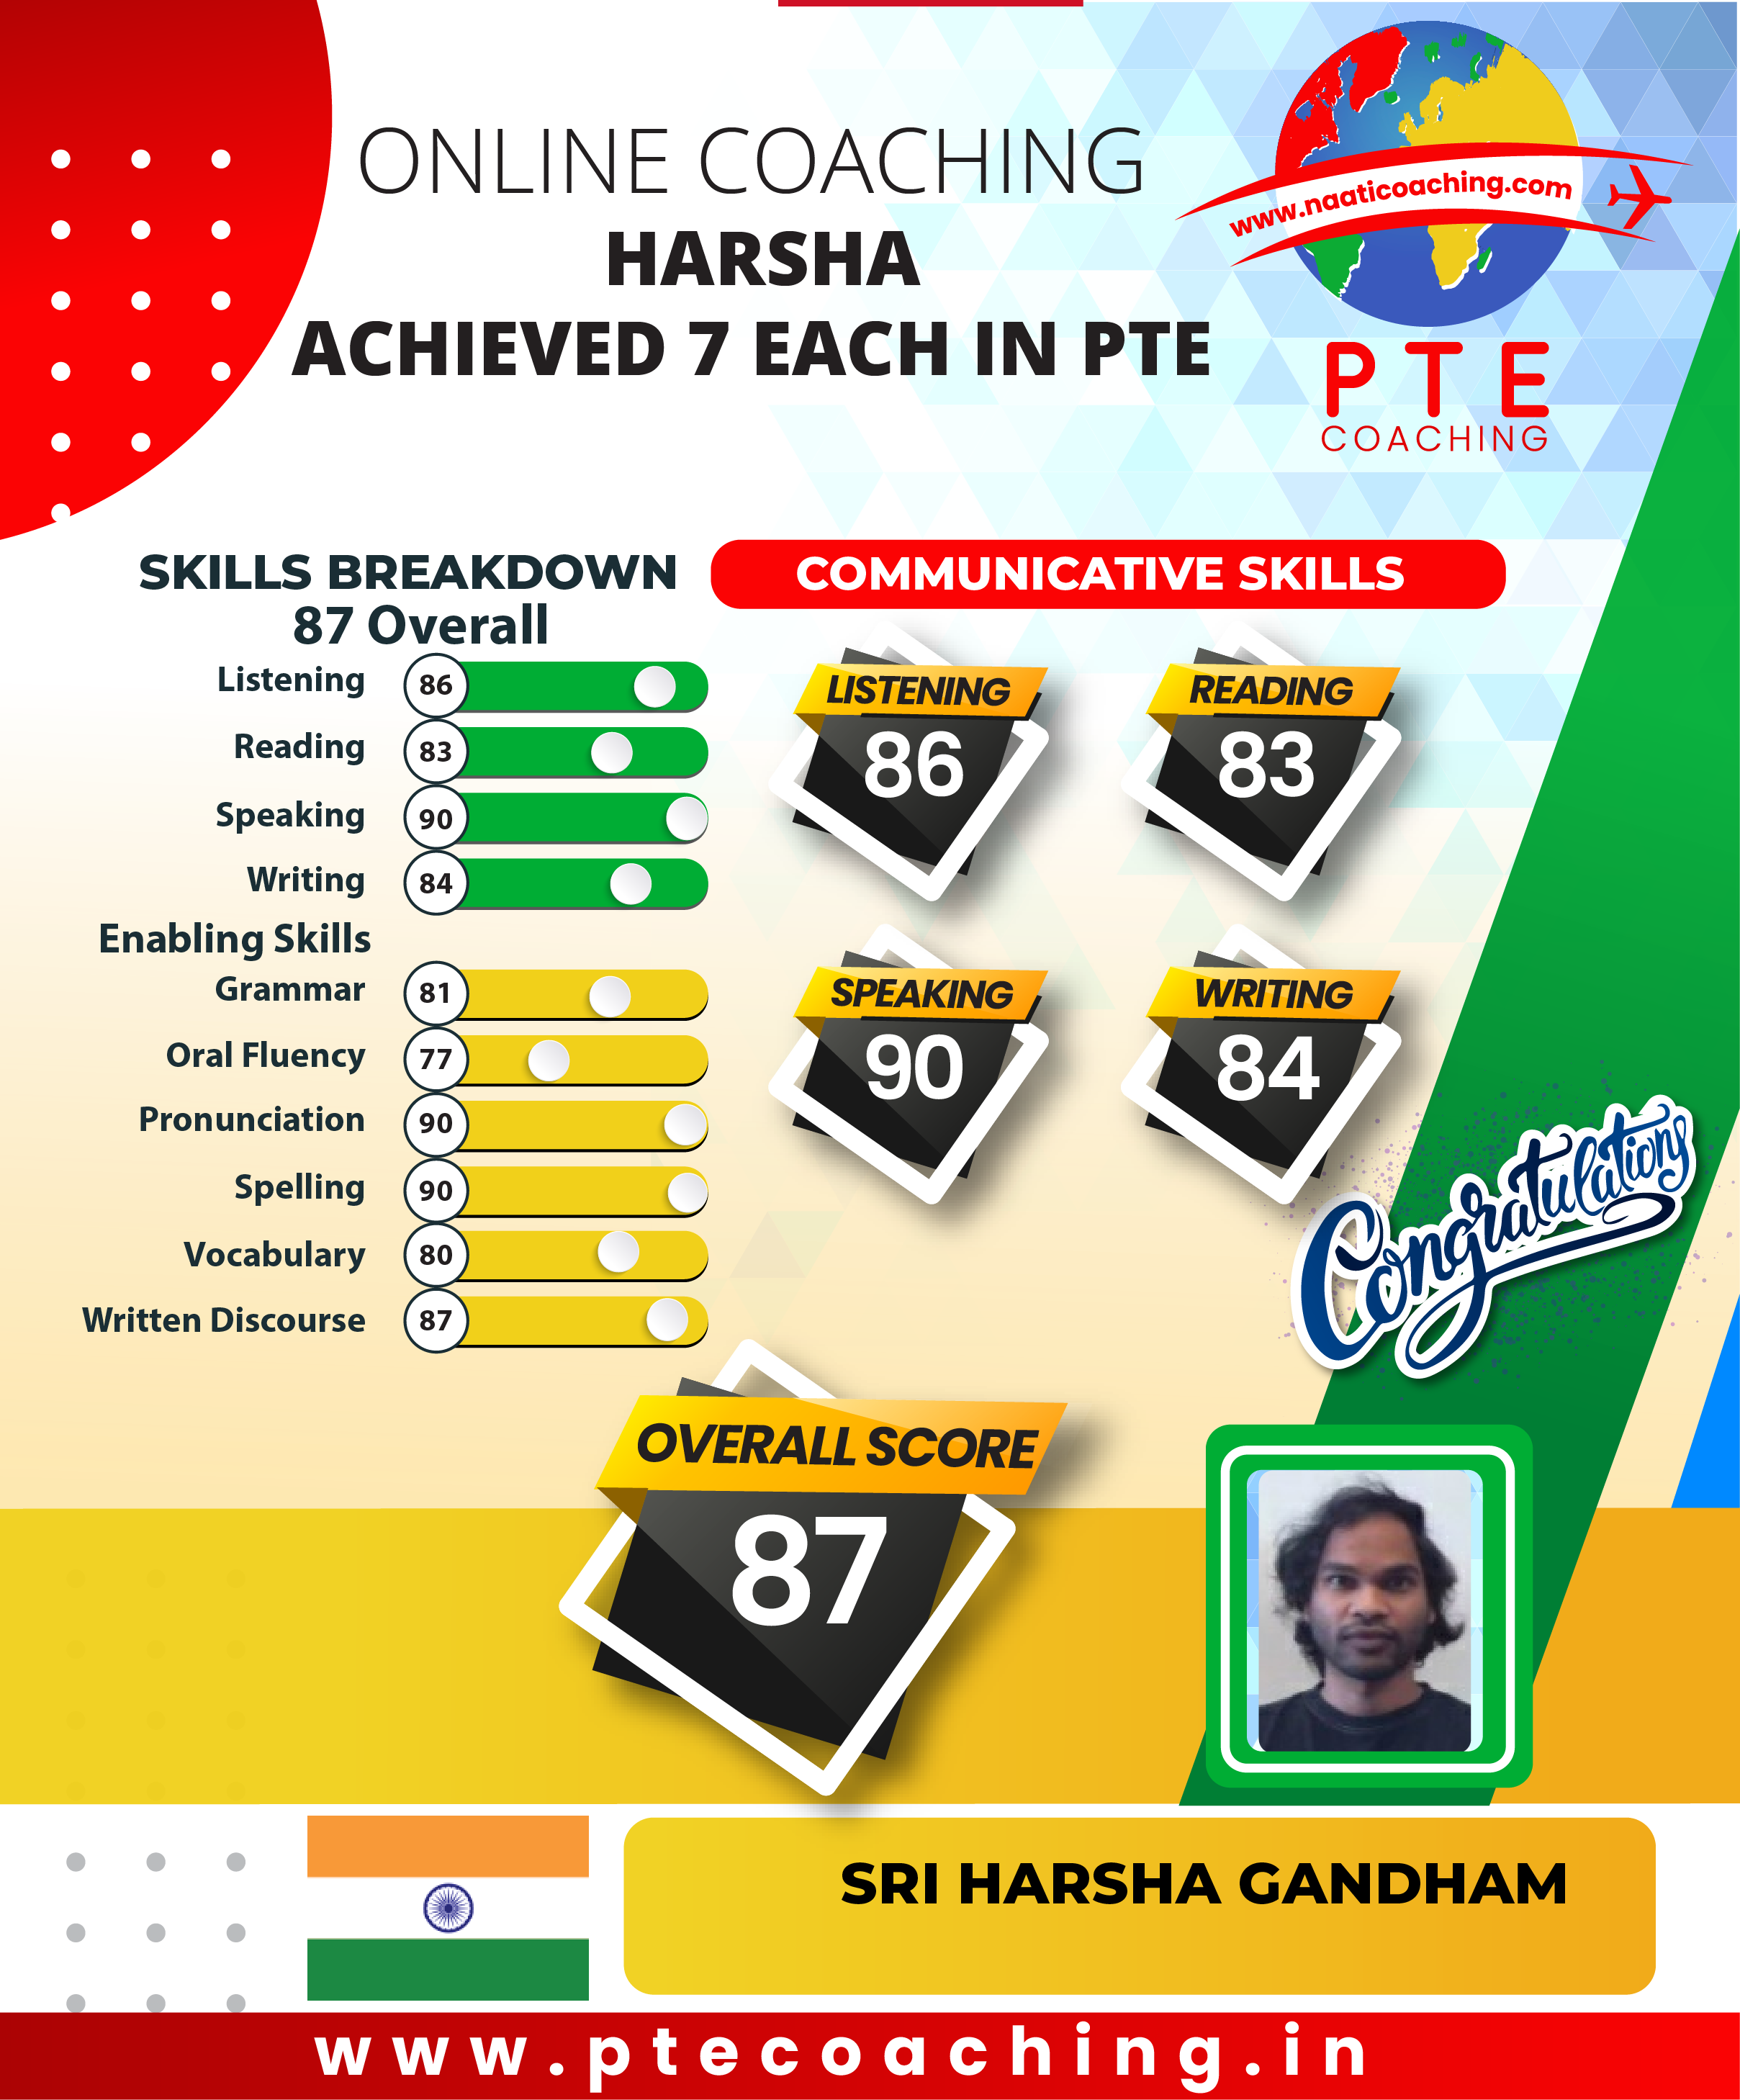 PTE Coaching Scorecard - Harsha achieved 7 each in PTE